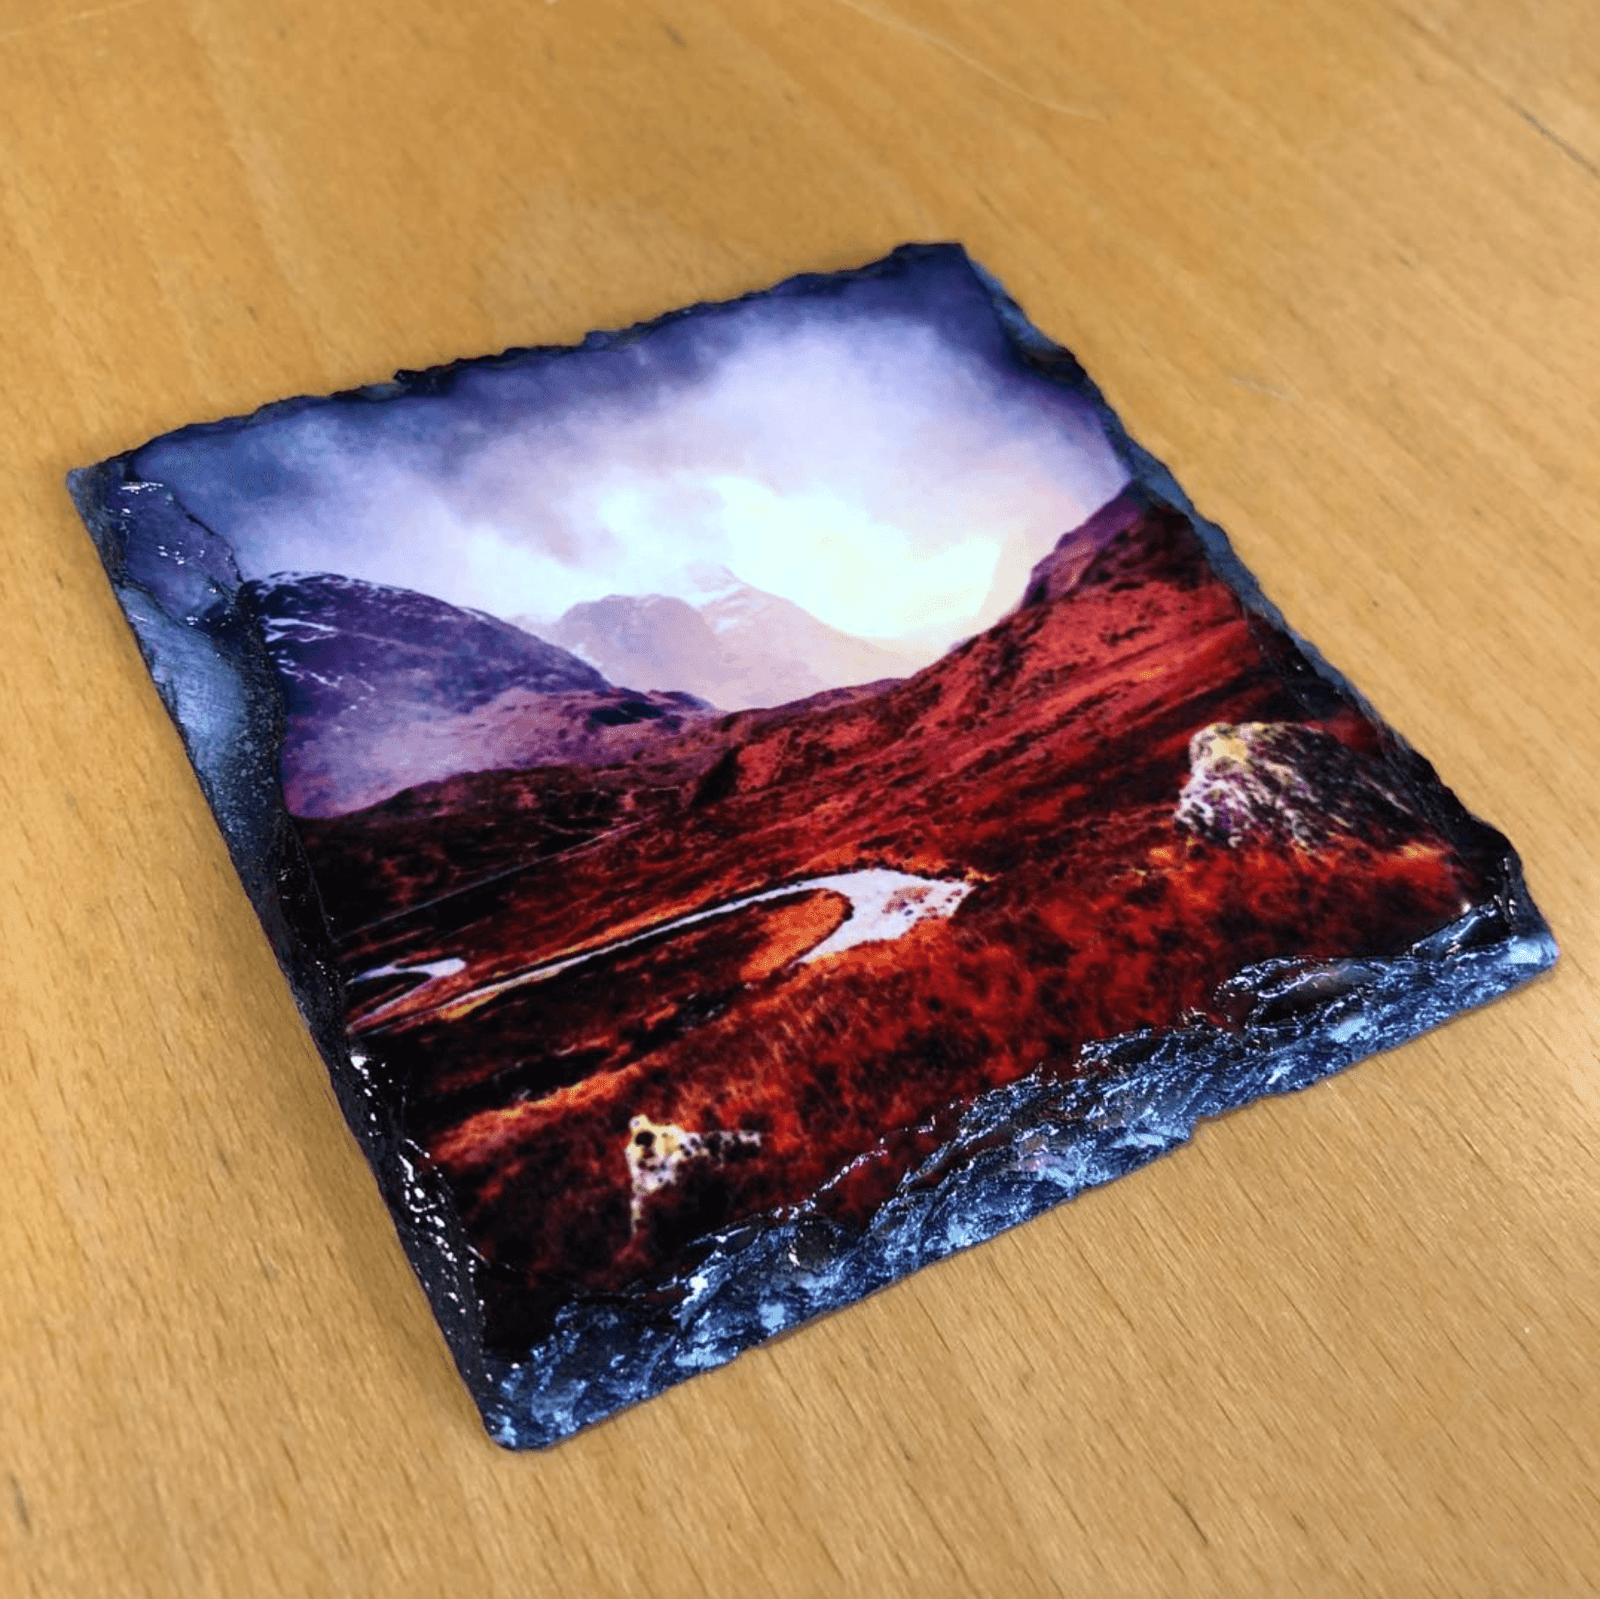 Loch Faskally Dusk Slate Art-Slate Art-Scottish Lochs & Mountains Art Gallery-Paintings, Prints, Homeware, Art Gifts From Scotland By Scottish Artist Kevin Hunter